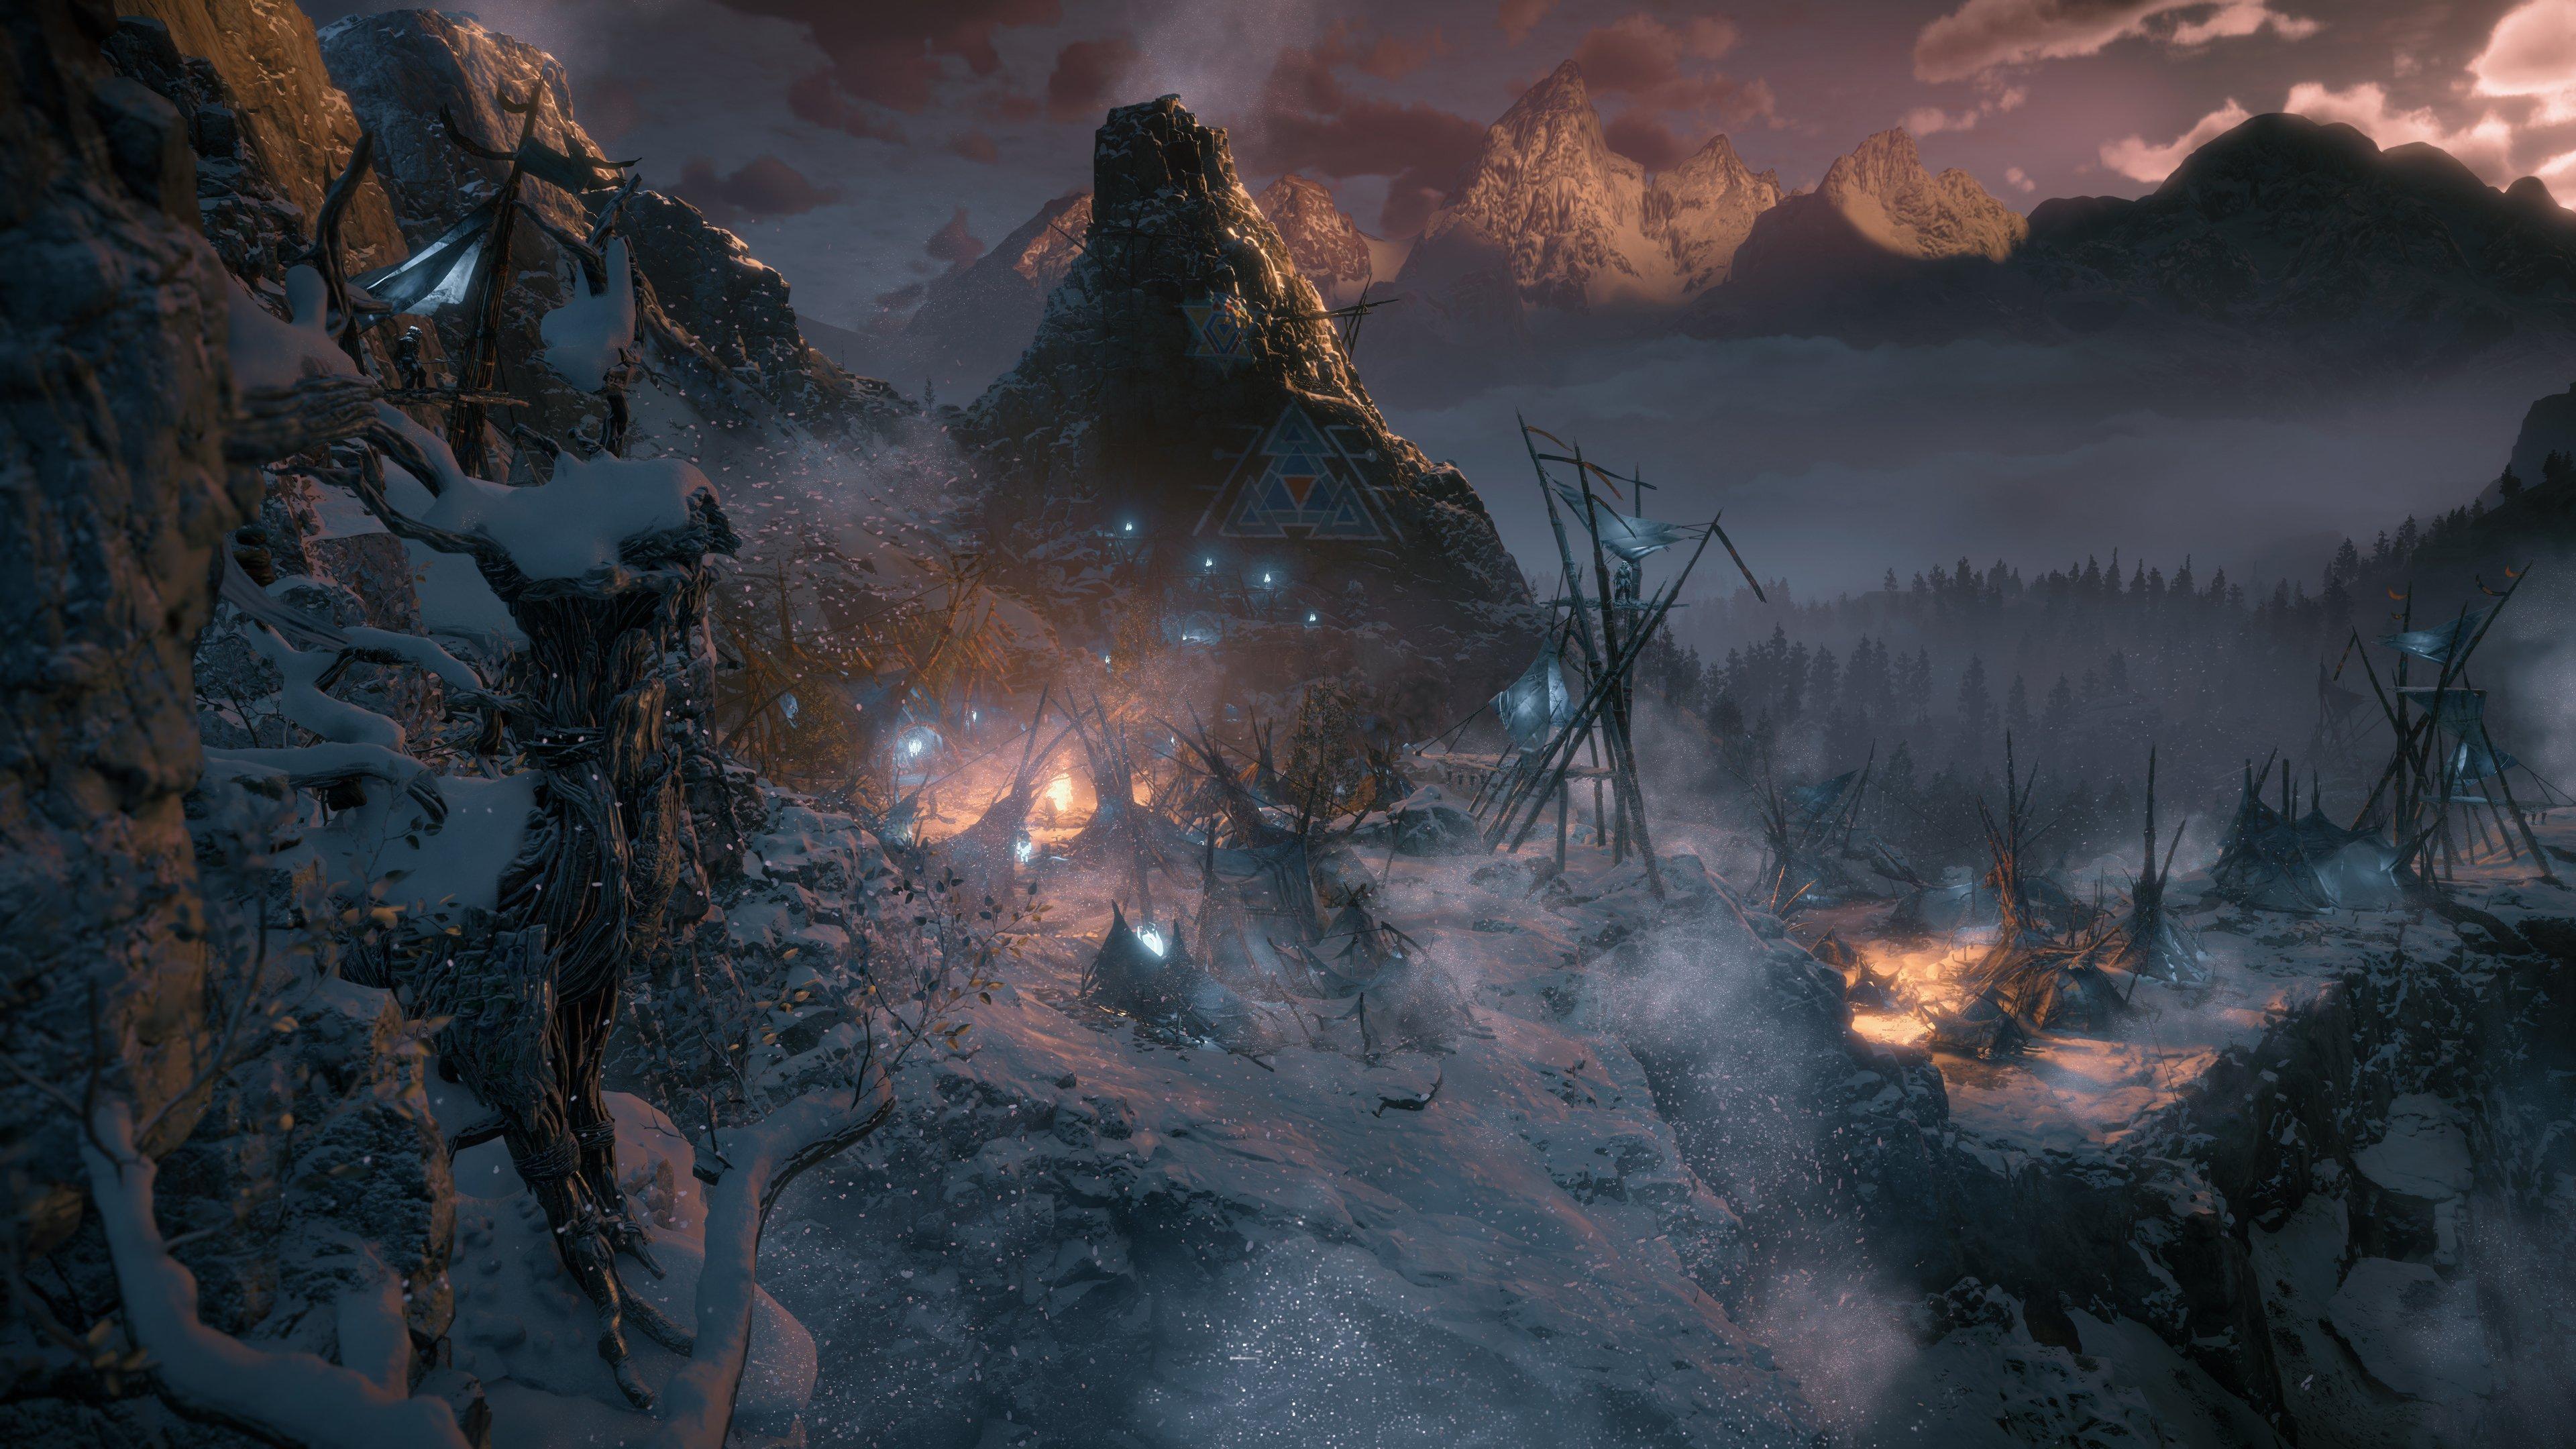 Horizon Zero Dawn: The narrative of the PS4 game